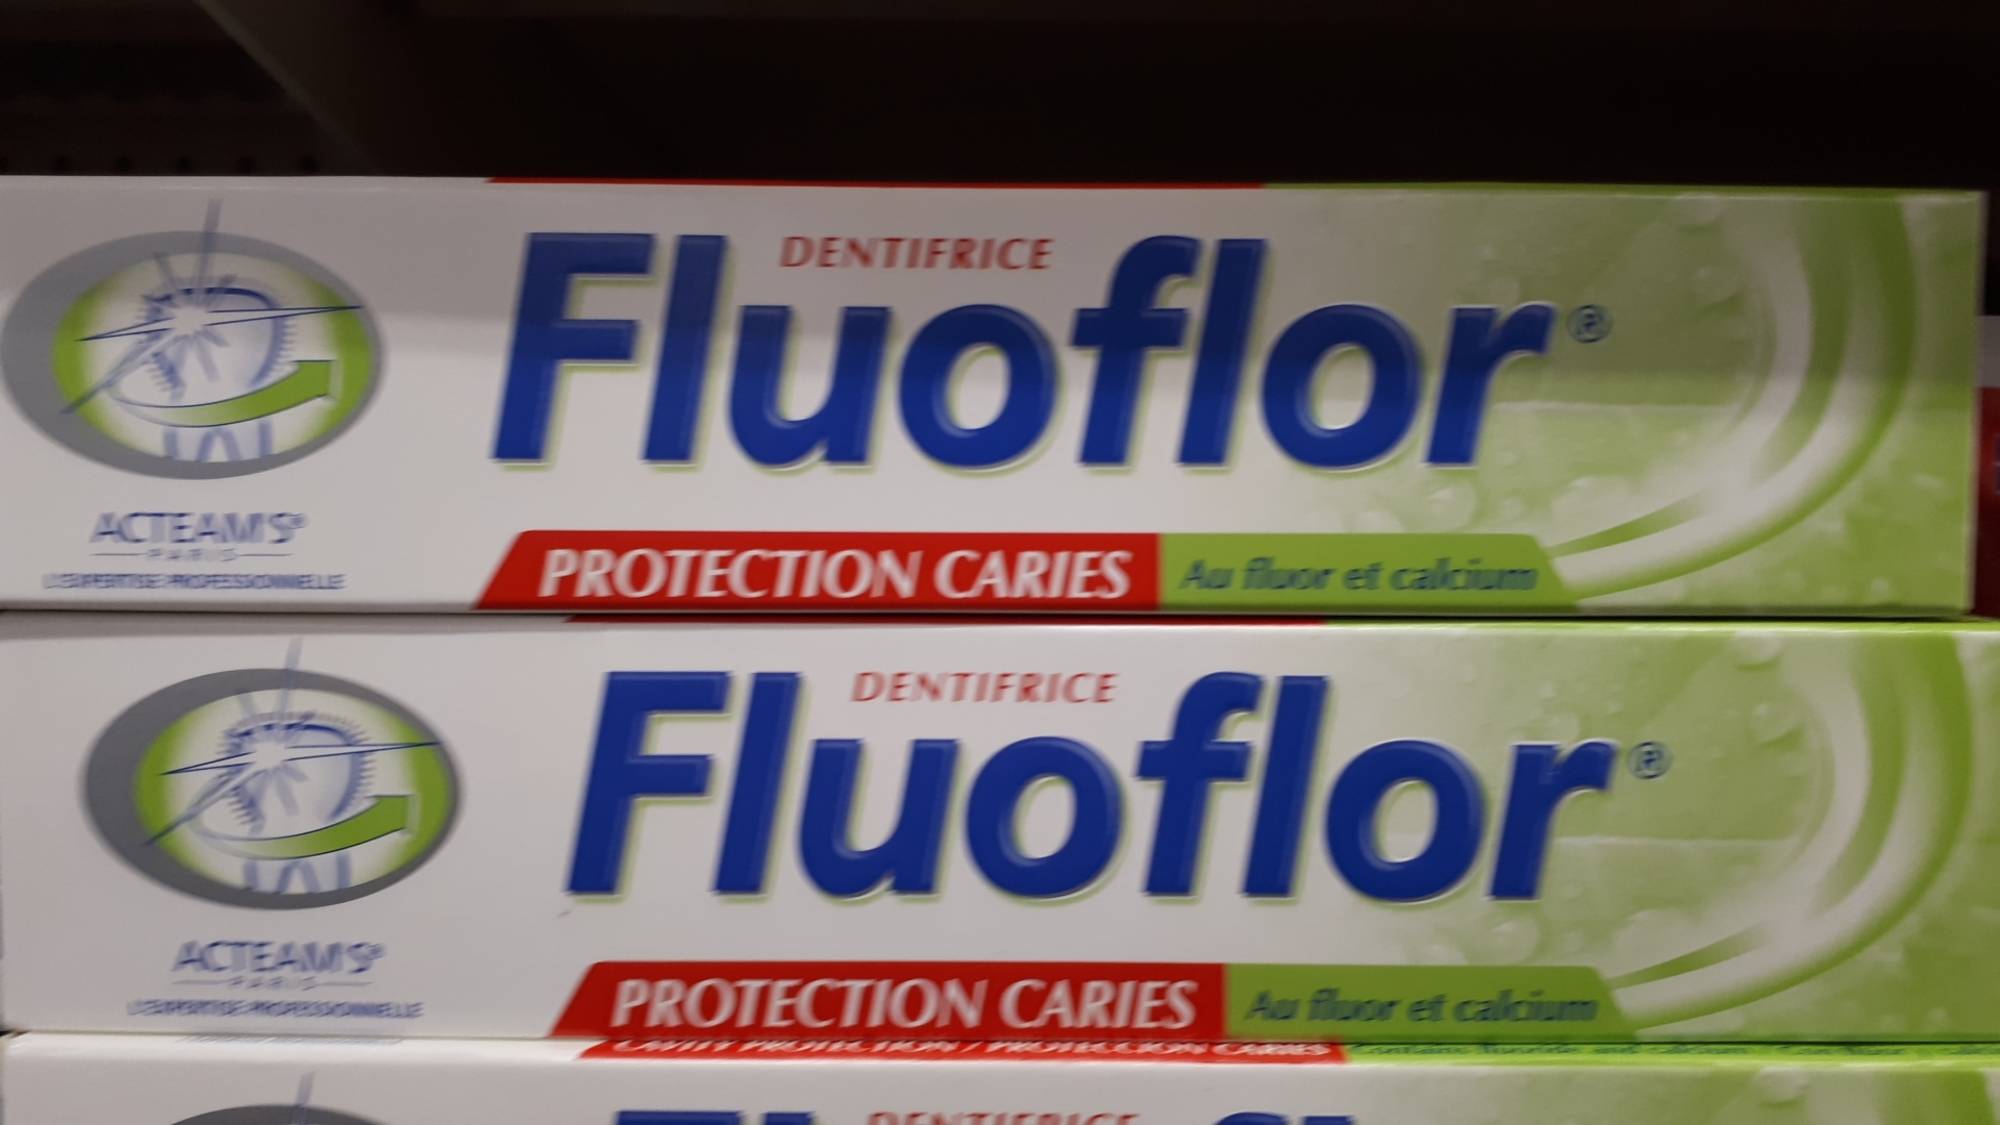 FLUOFLOR - Protection caries - Dentifrice au fluor et calcium